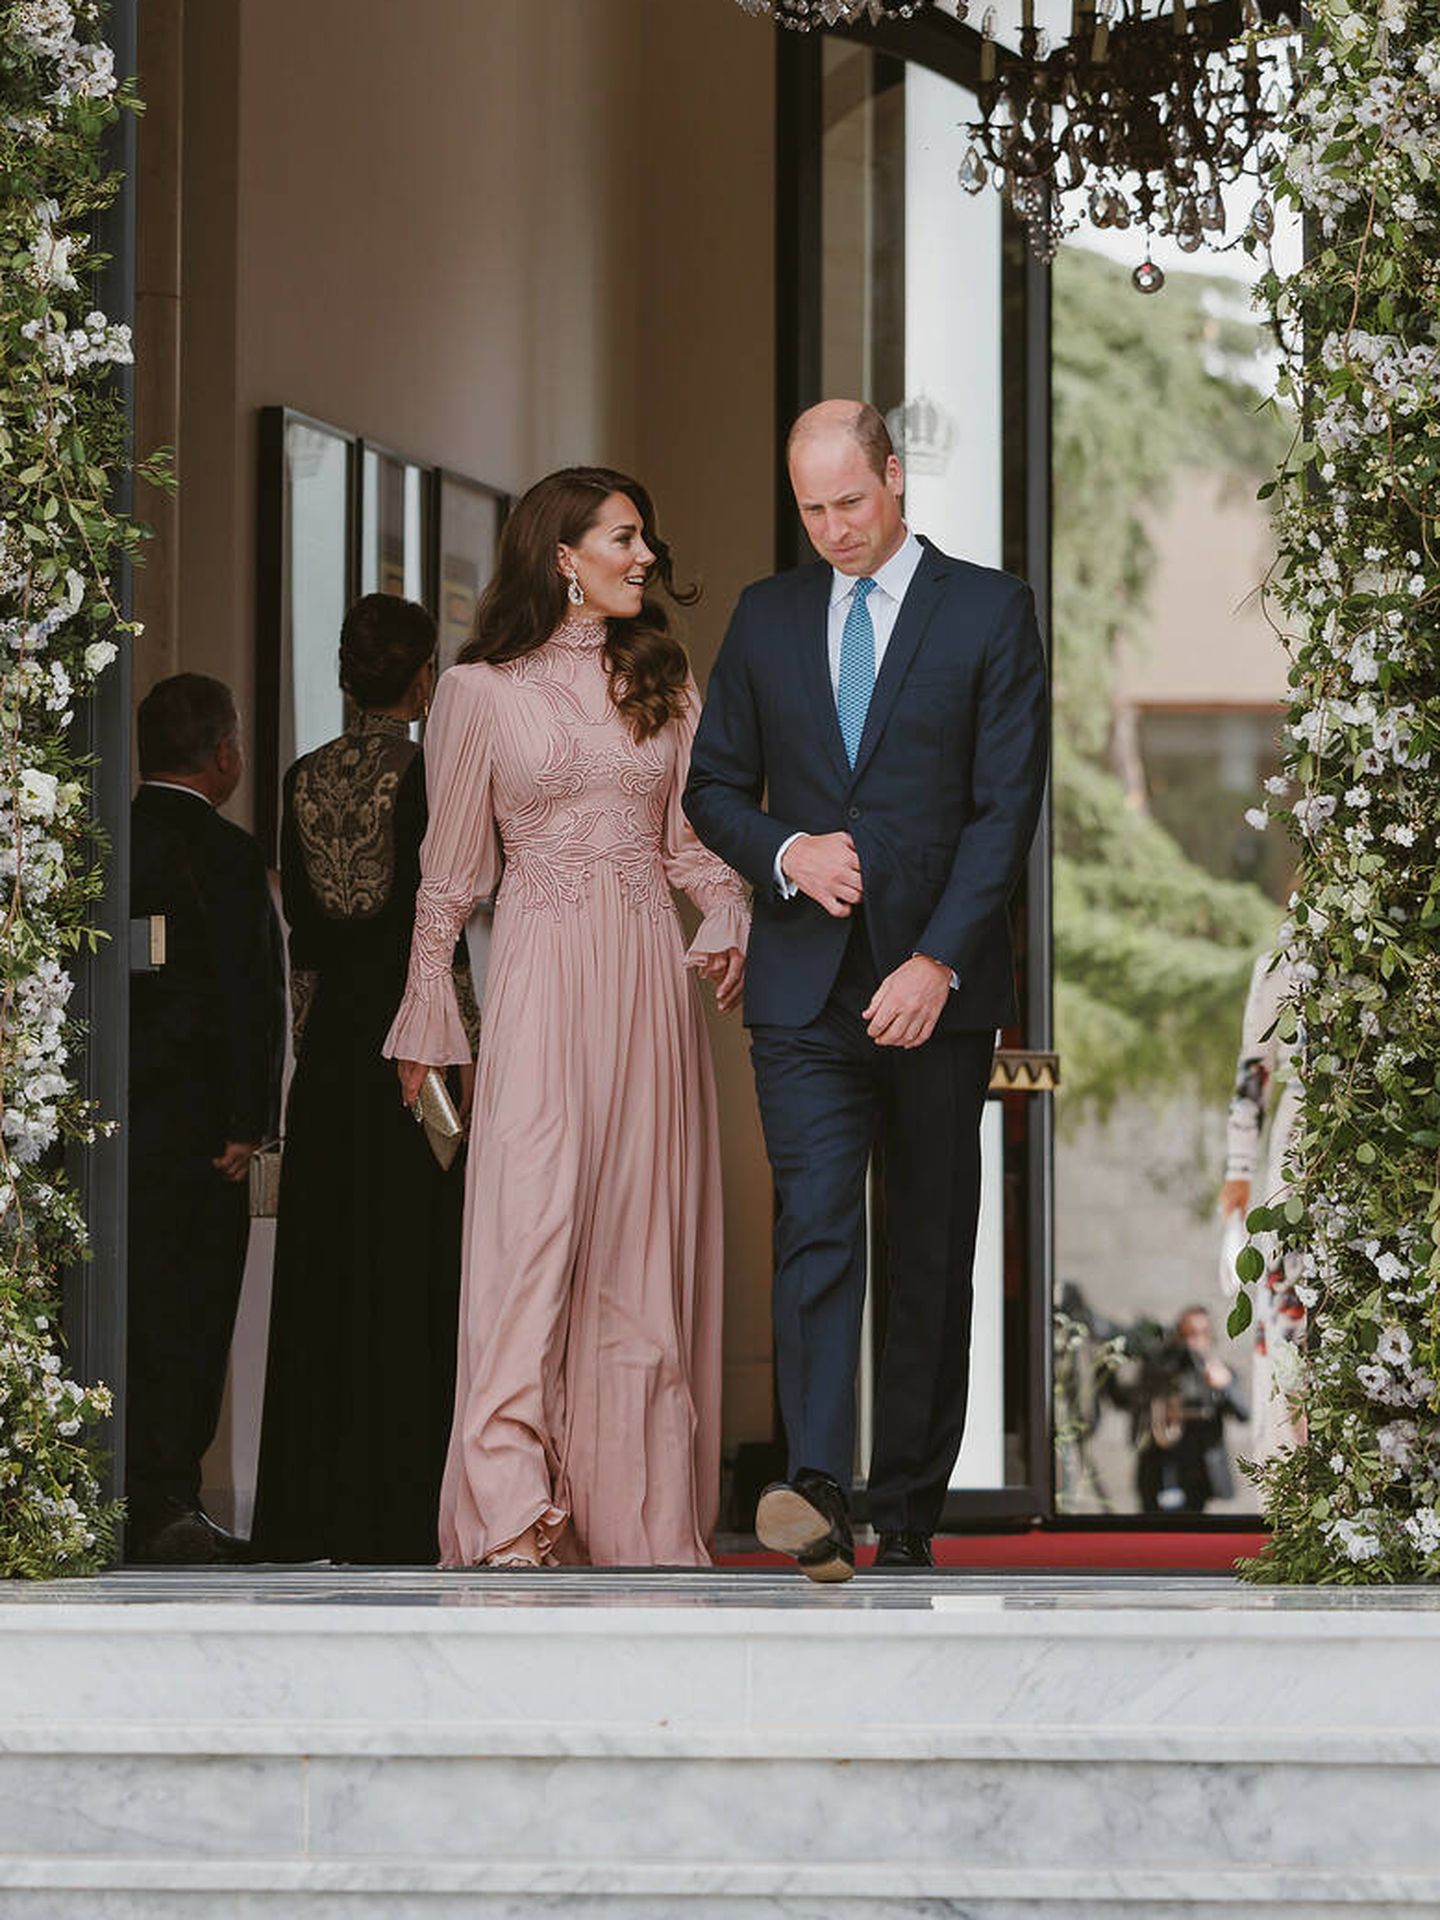 Guillermo y Kate Middleton en la boda de Hussein de Jordania. (RHC)